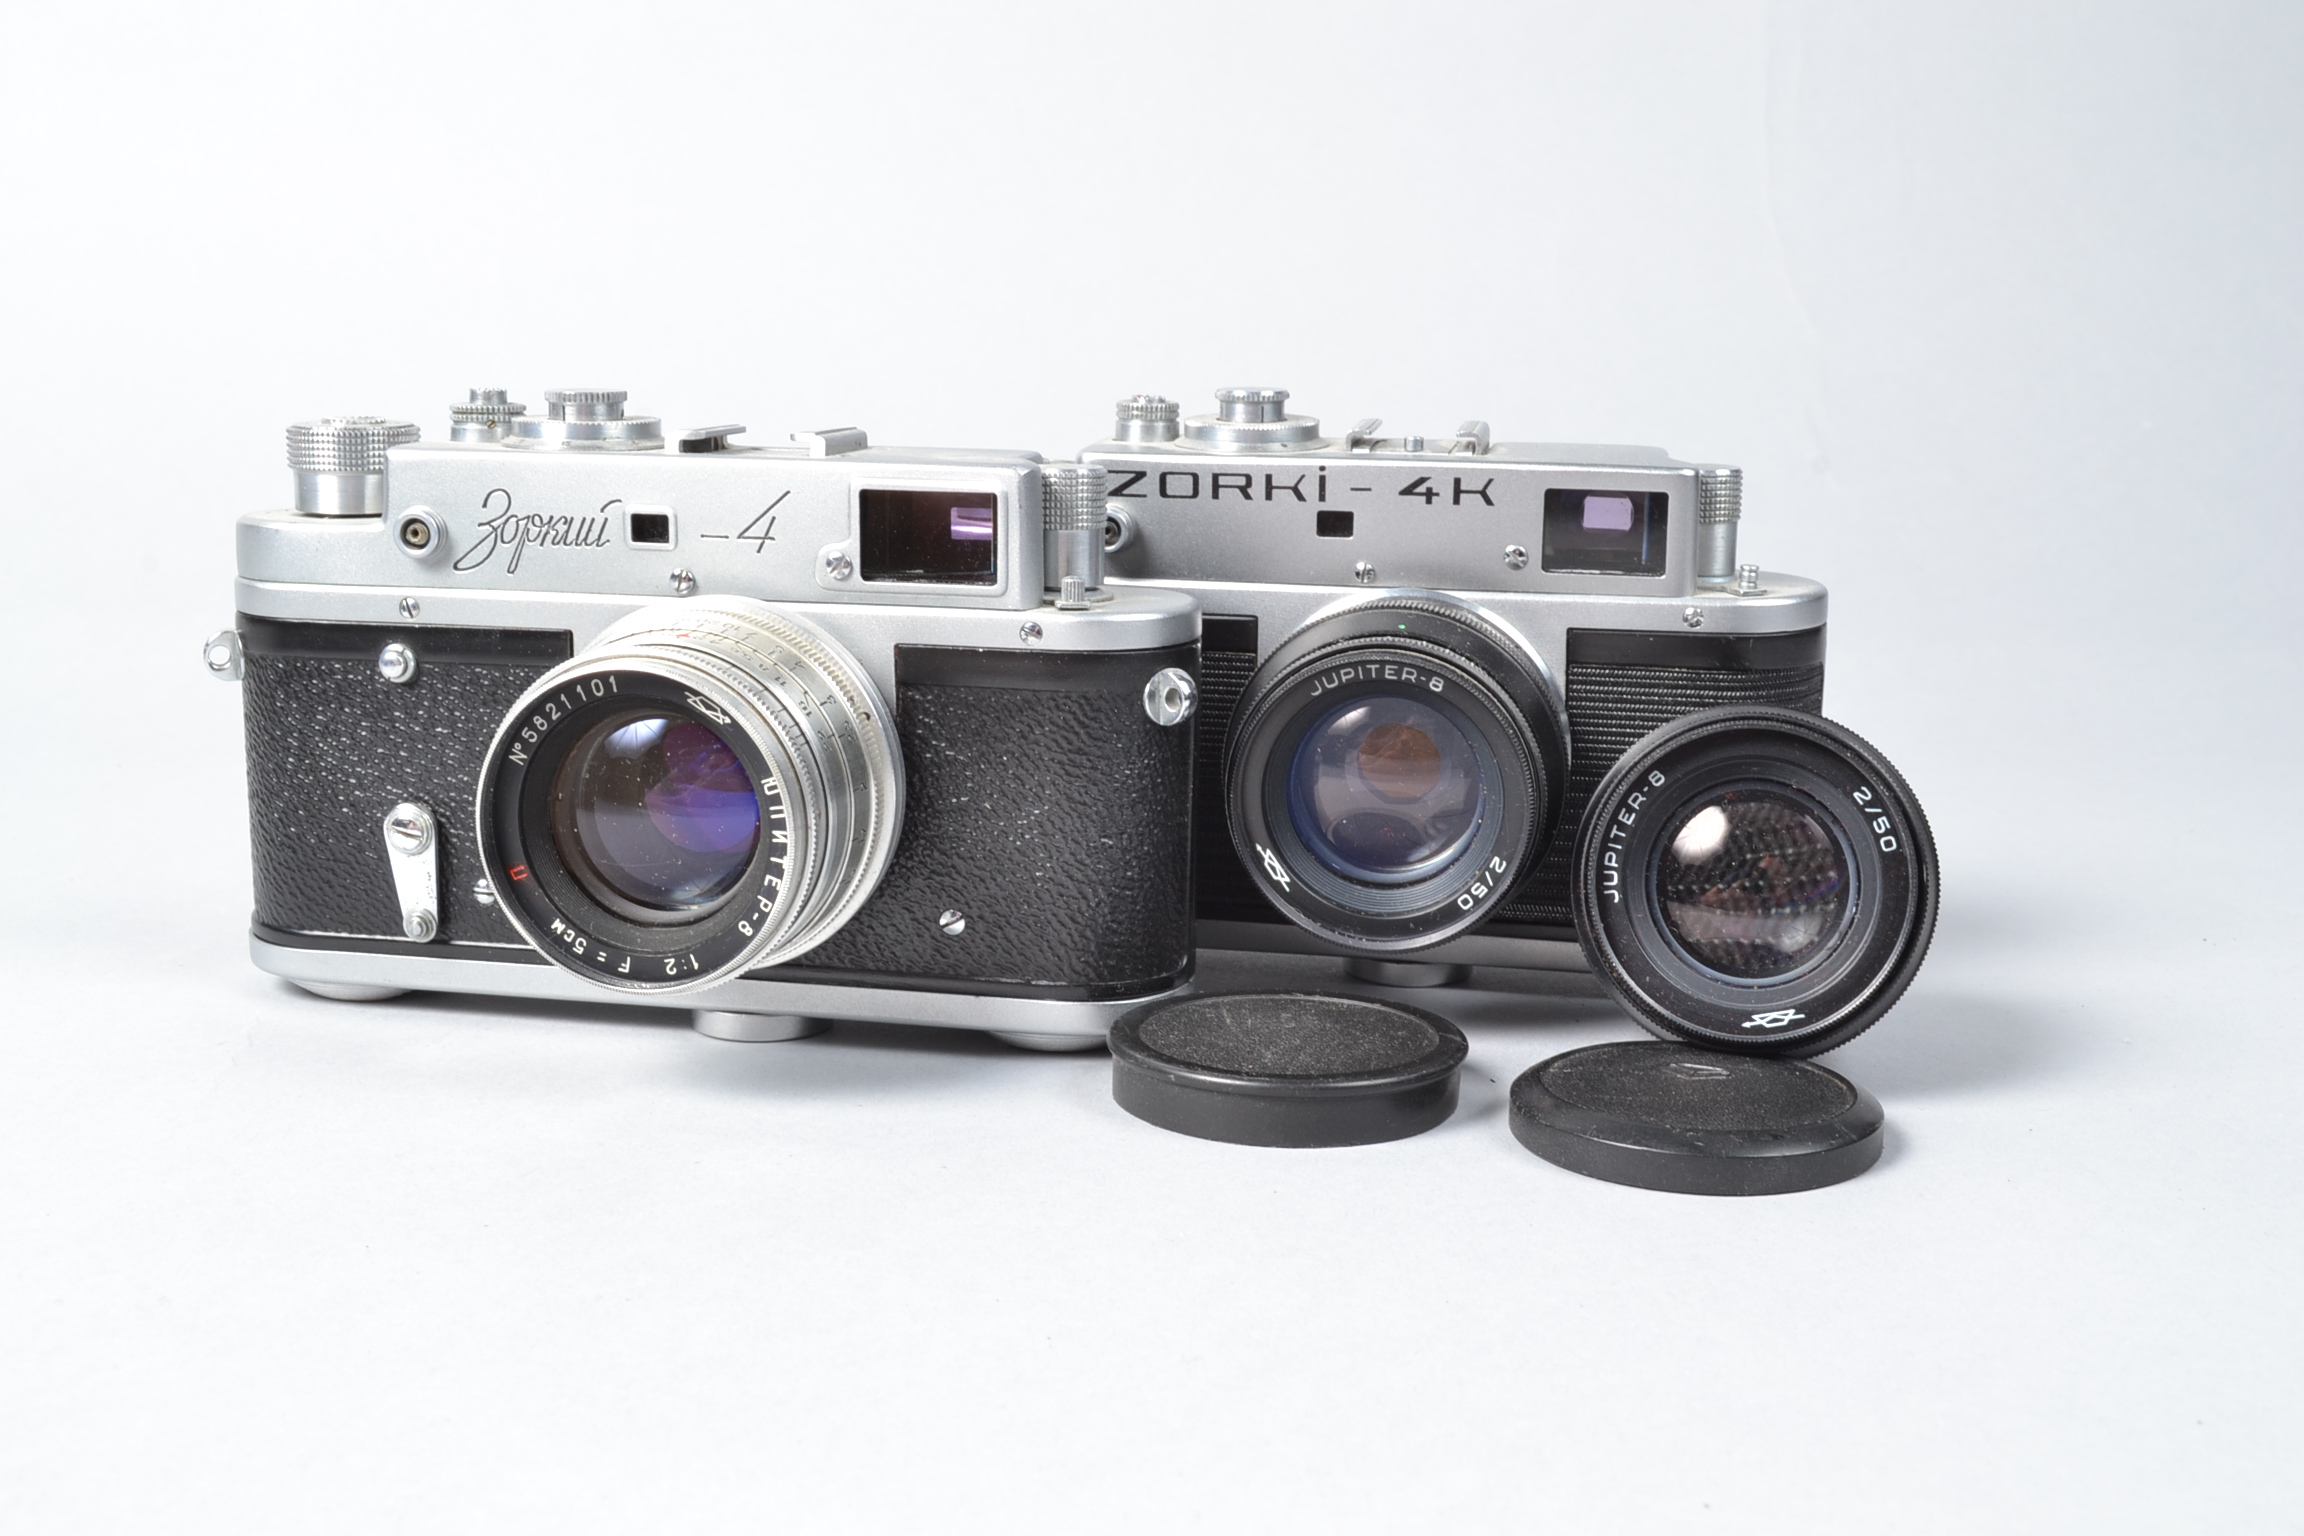 Two Zorki Cameras, a Zorki 4 Cyrillic, with Jupiter 6 5cm f/2 lens, a Zorki 4K, with Jupiter 8